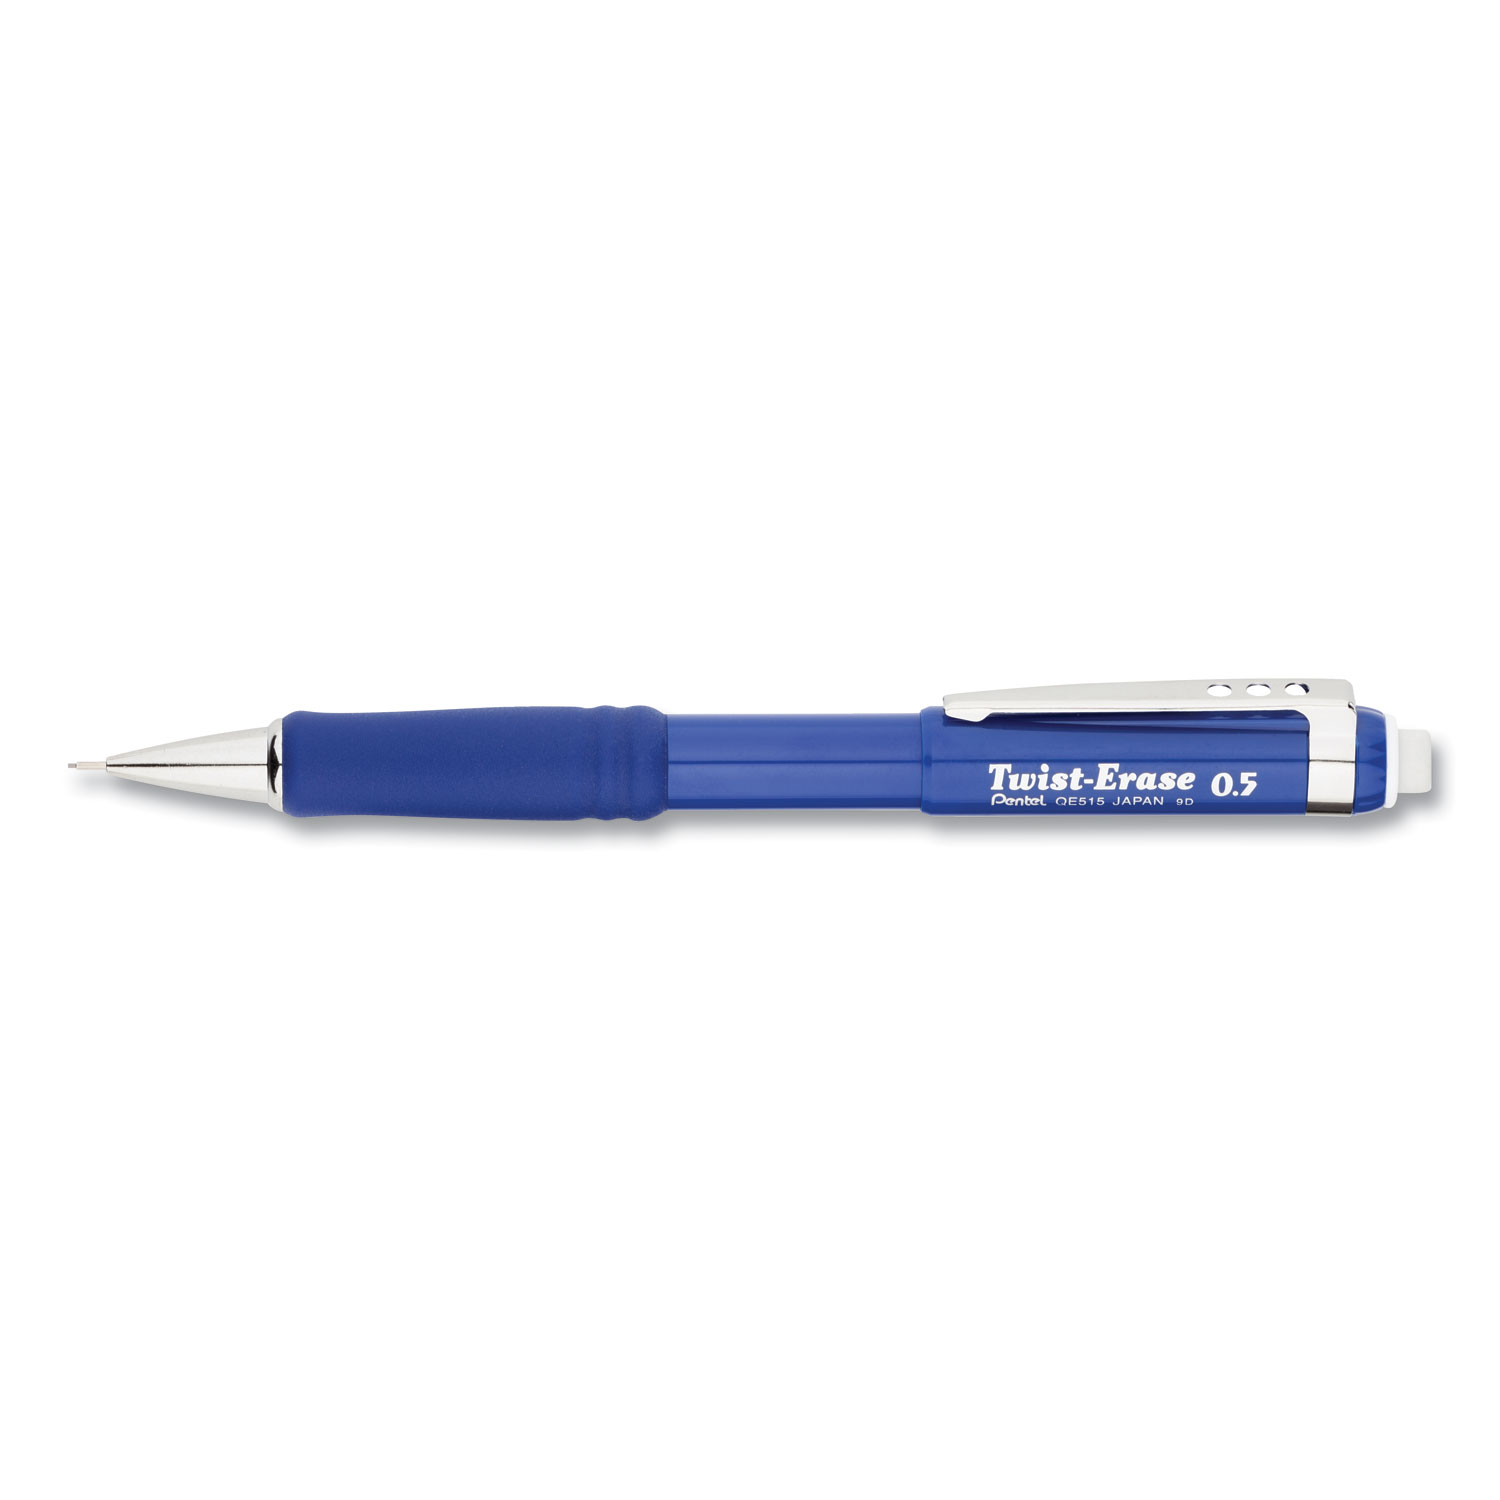  Pentel QE515C Twist-Erase III Mechanical Pencil, 0.5 mm, HB (#2.5), Black Lead, Blue Barrel (PENQE515C) 